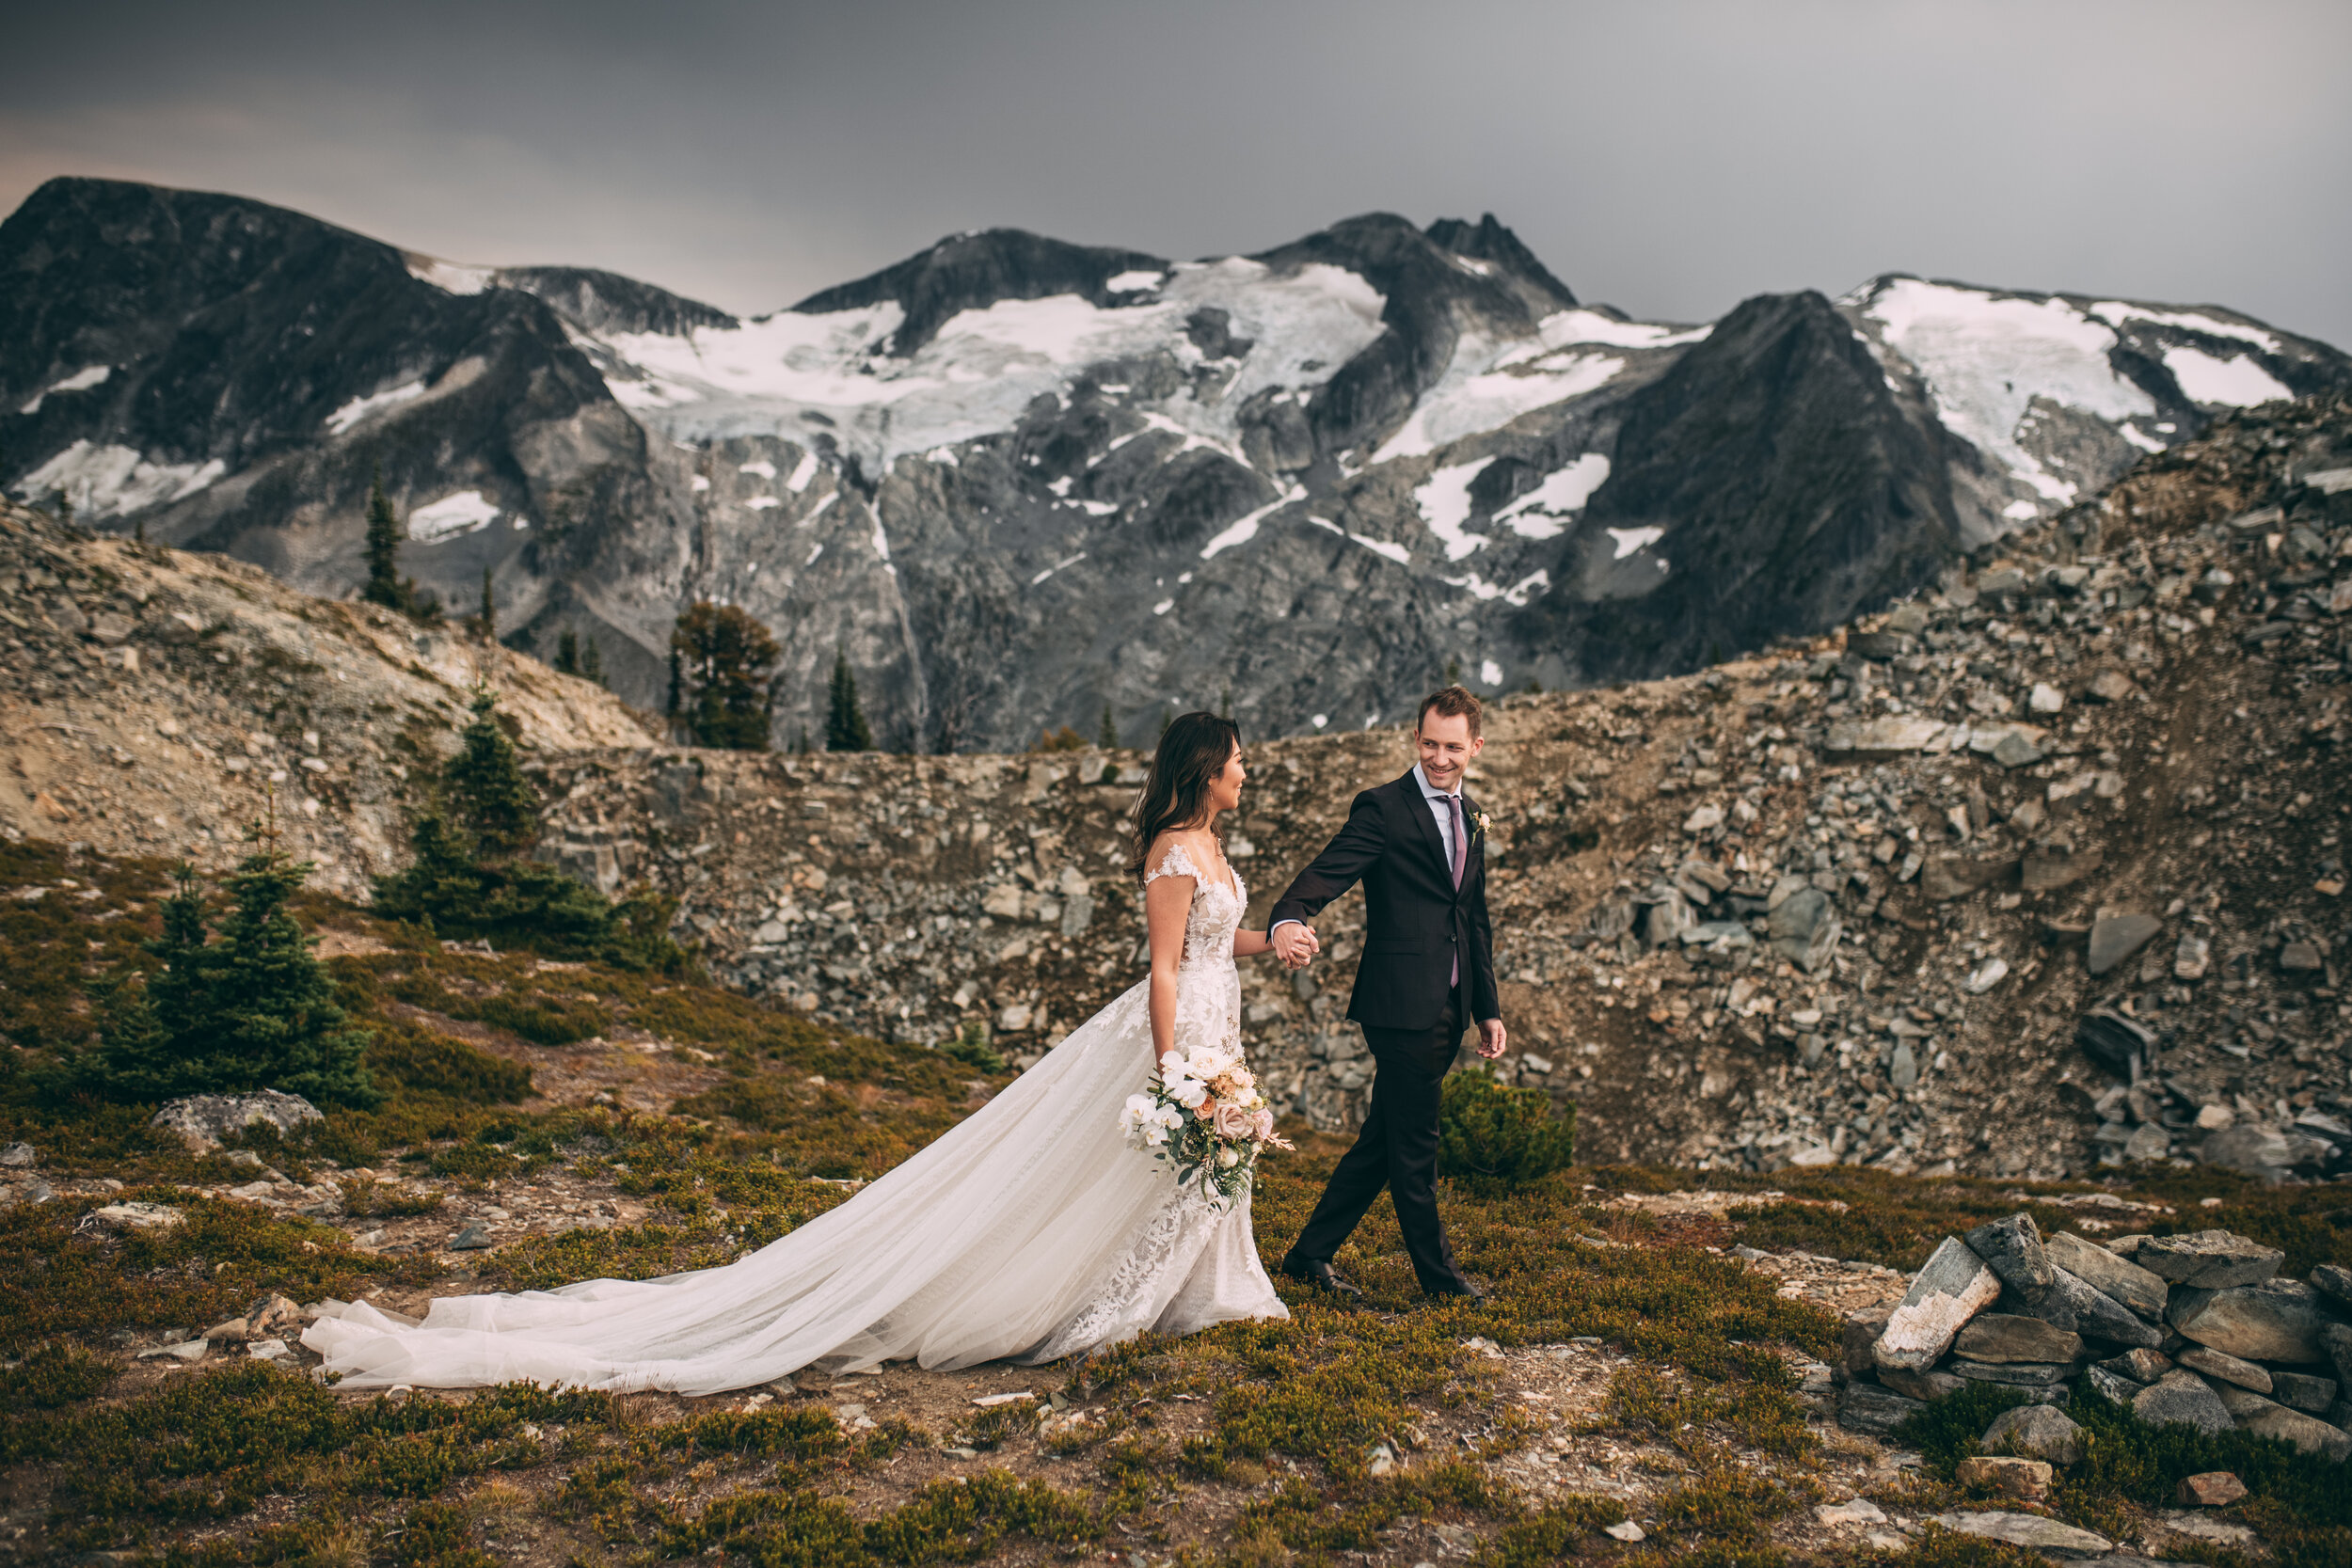 Katherine & Jamie Sneak Peeks - Mountain Top Elopement - Whistler BC - Laura Olson Photography--8.jpg